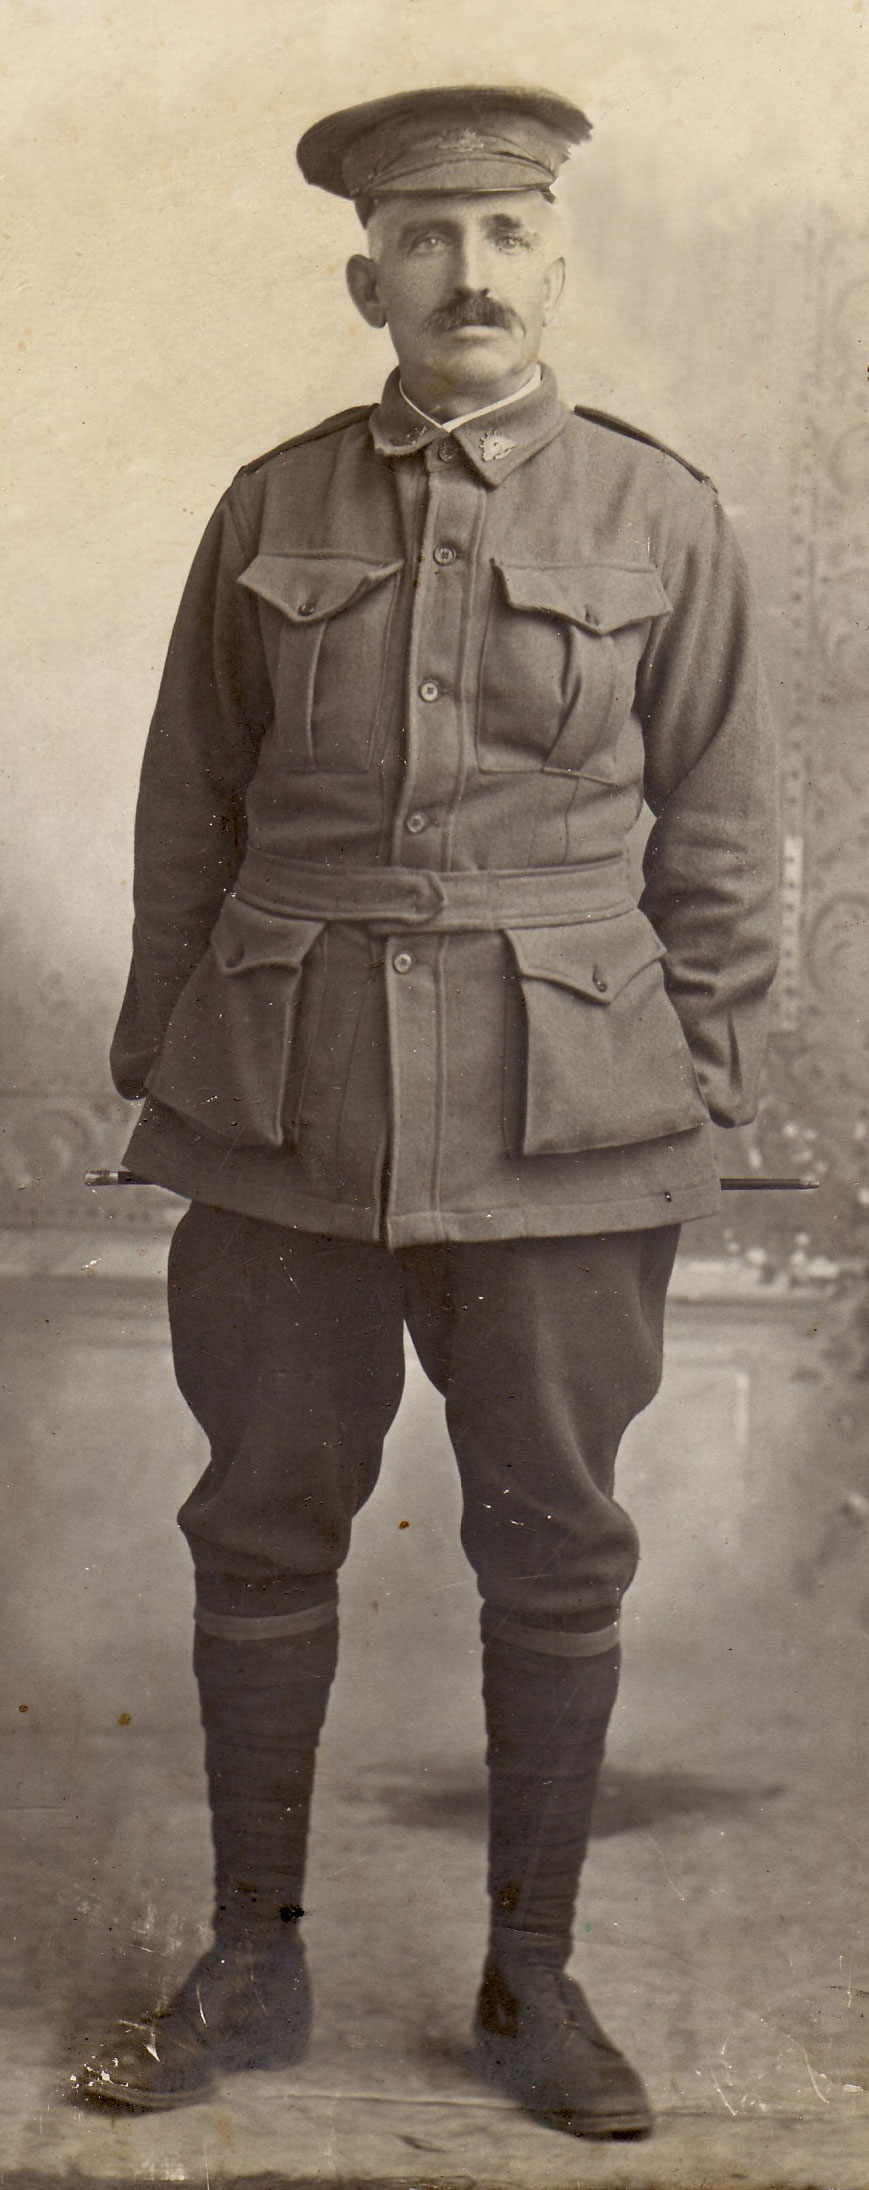 Stawell William Wade Garnett, one of the missing Cranleighans who fell in World War One